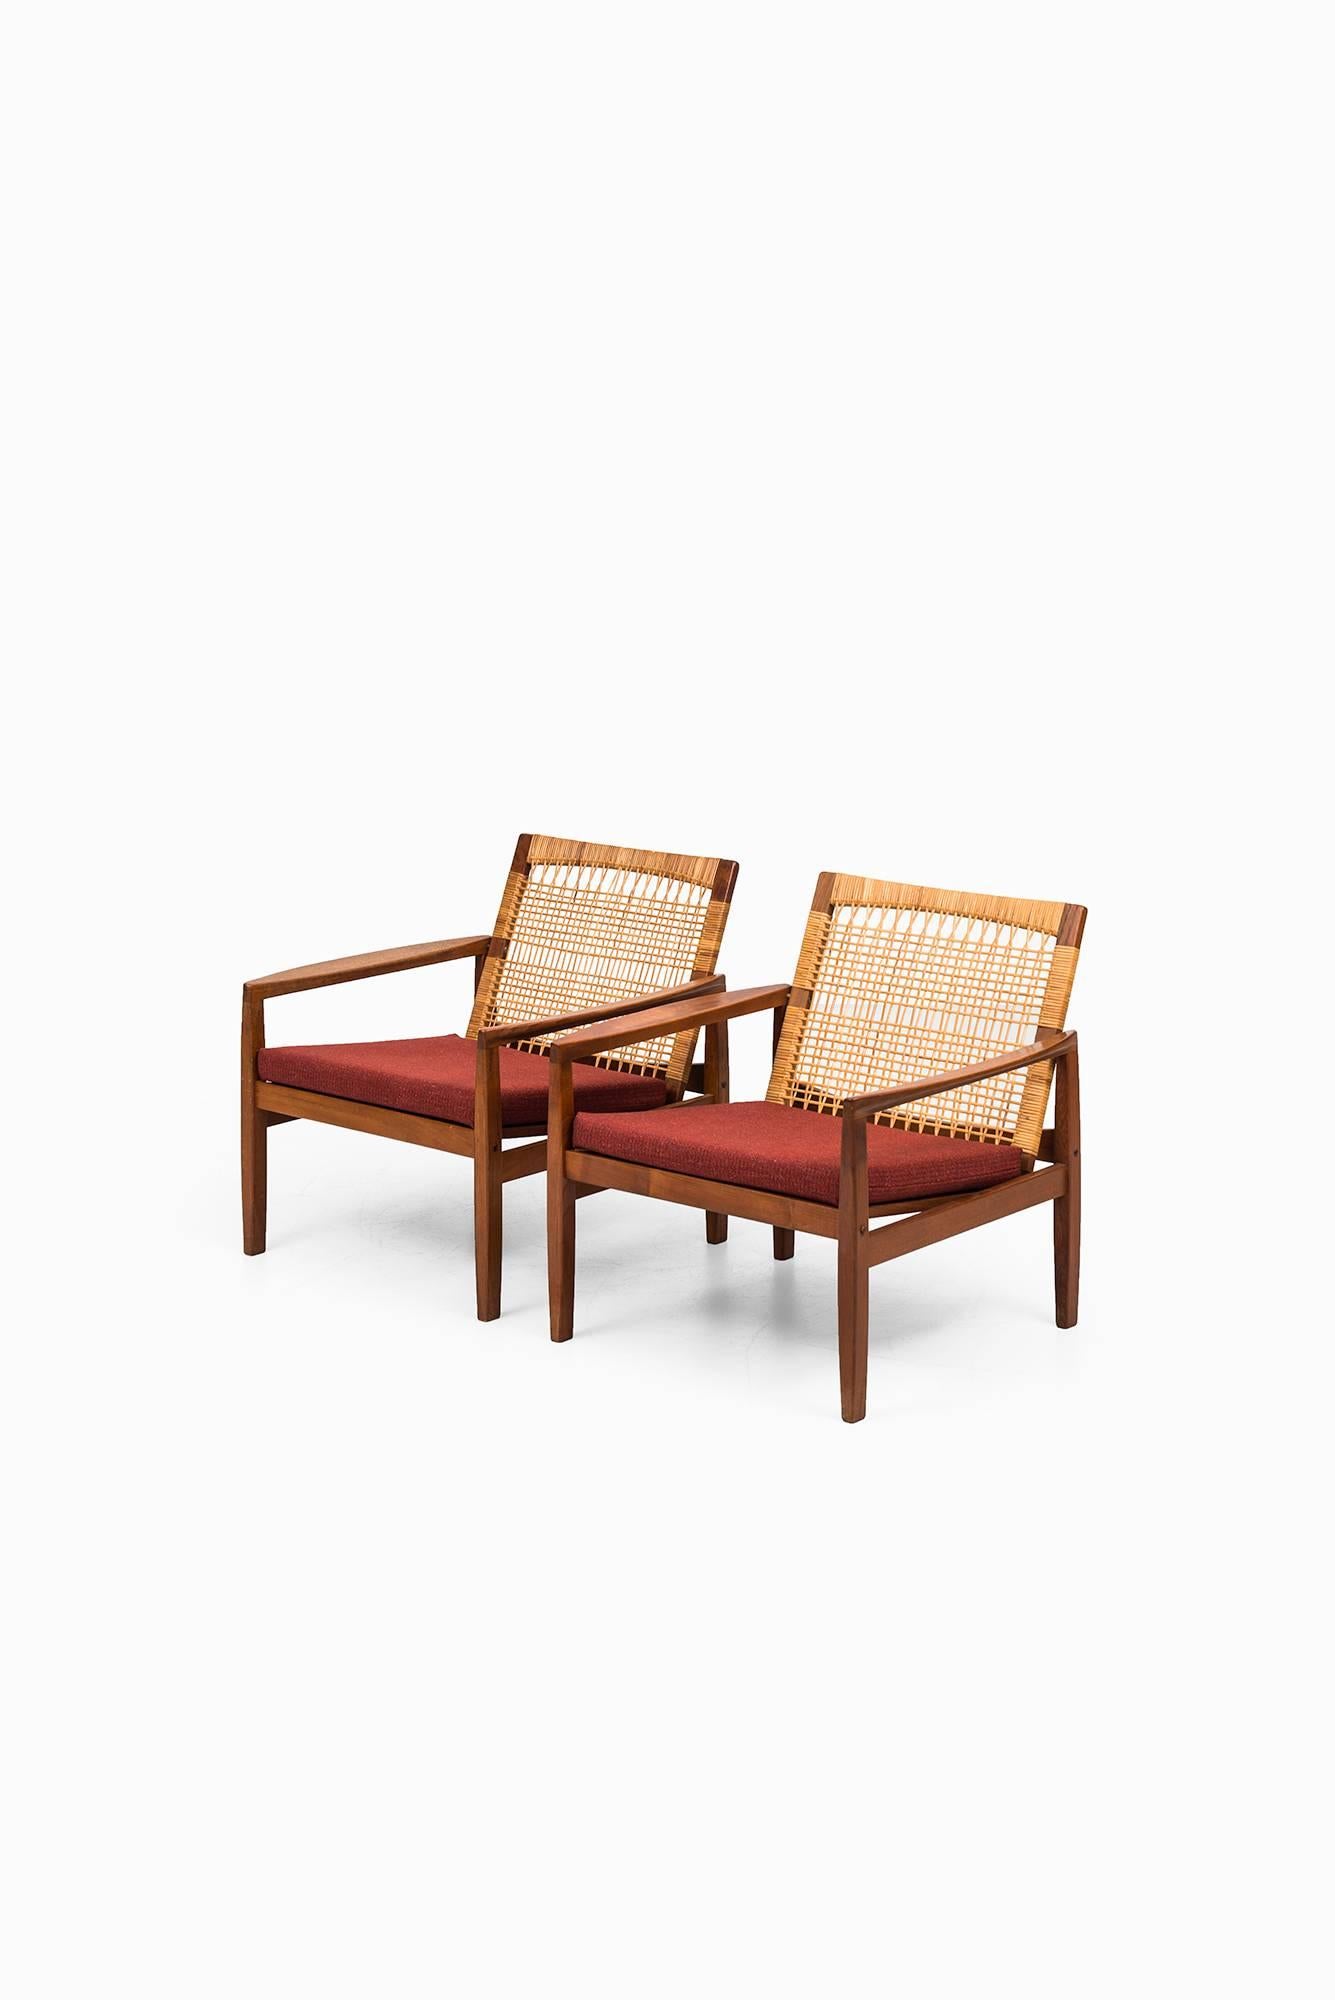 Rare pair of easy chairs model 519 designed by Hans Olsen. Produced by Juul Kristensen in Denmark.